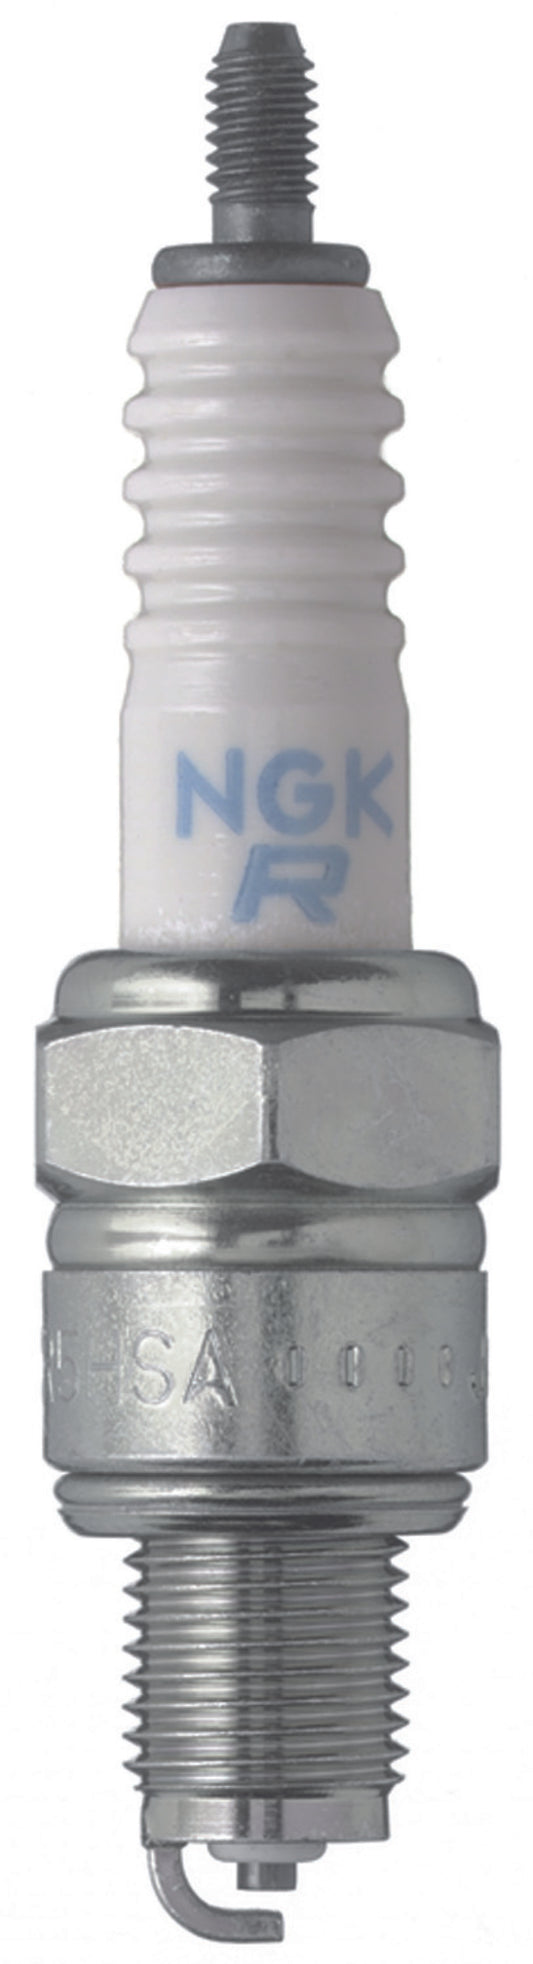 NGK BLYB Spark Plug Box of 6 (CR7HSA)